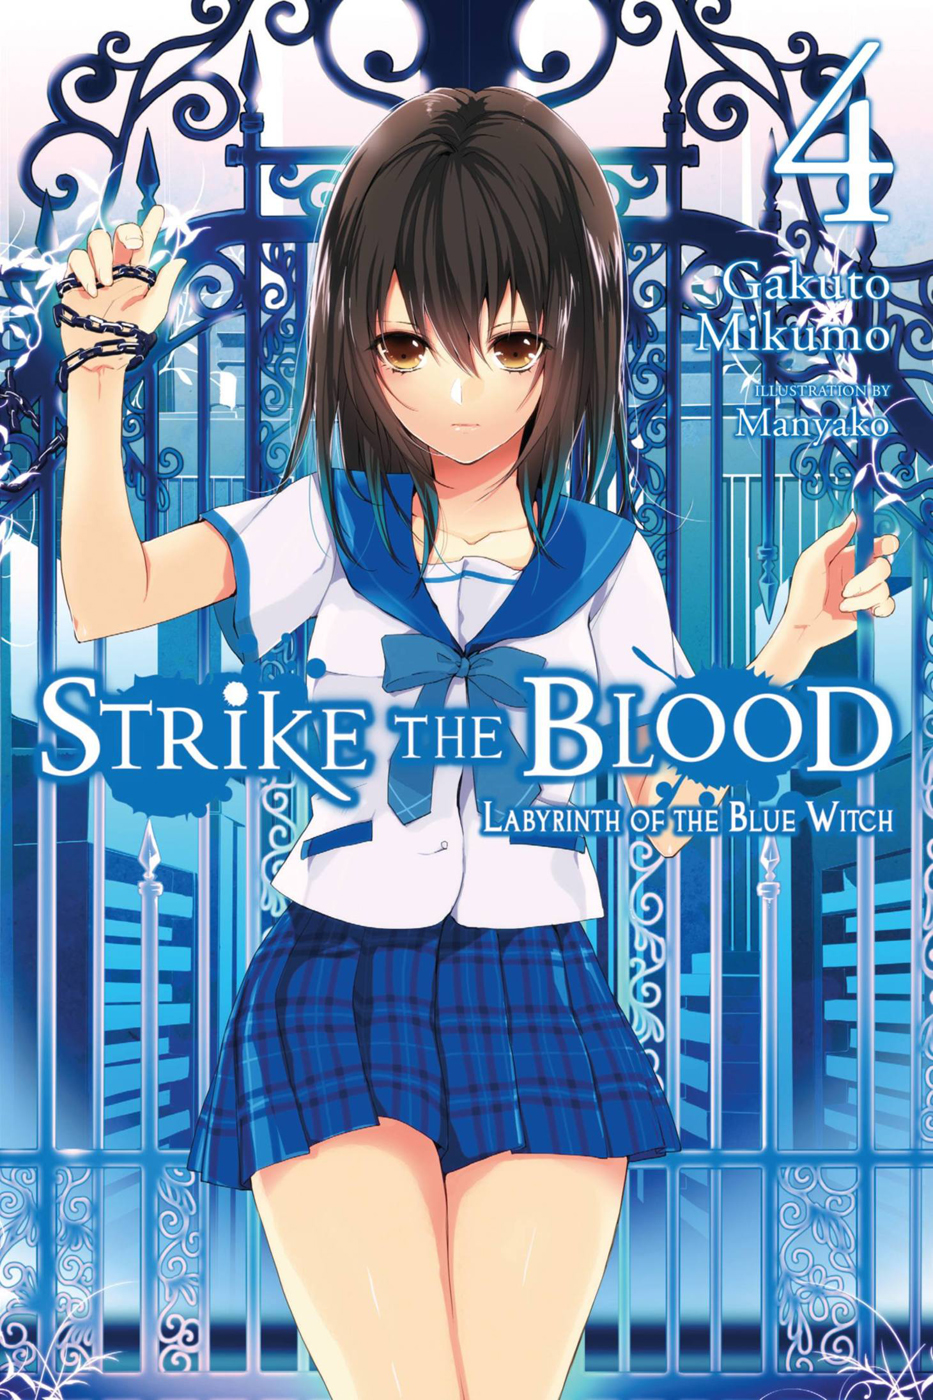 Strike the Blood, Vol. 2 - manga (Strike the Blood (manga), 2) (Volume 2)